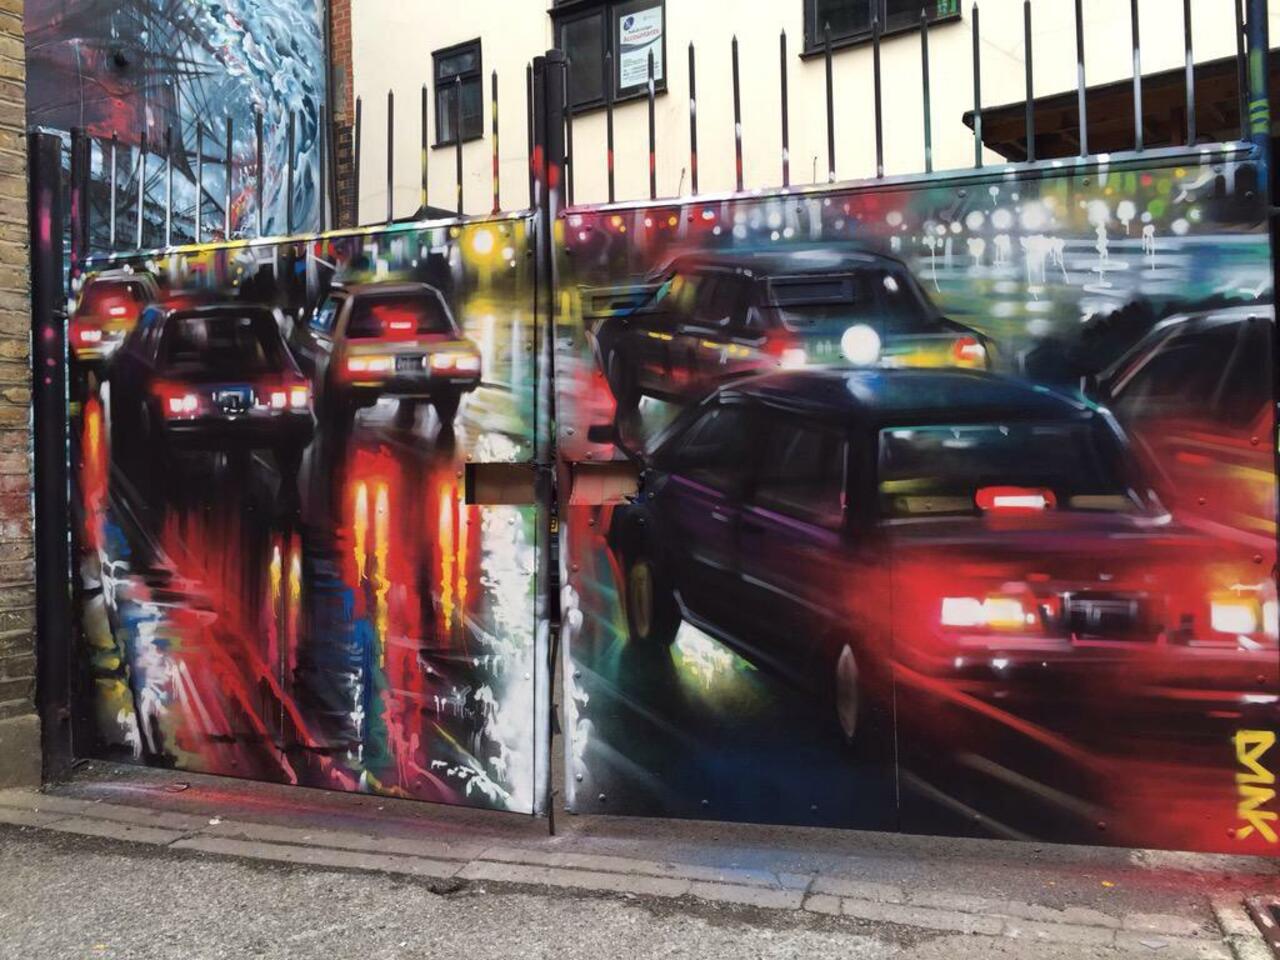 New Street Art by DanKitchener in Brick Lane London 

#art #graffiti #mural #streetart http://t.co/Nun4hh7OhG